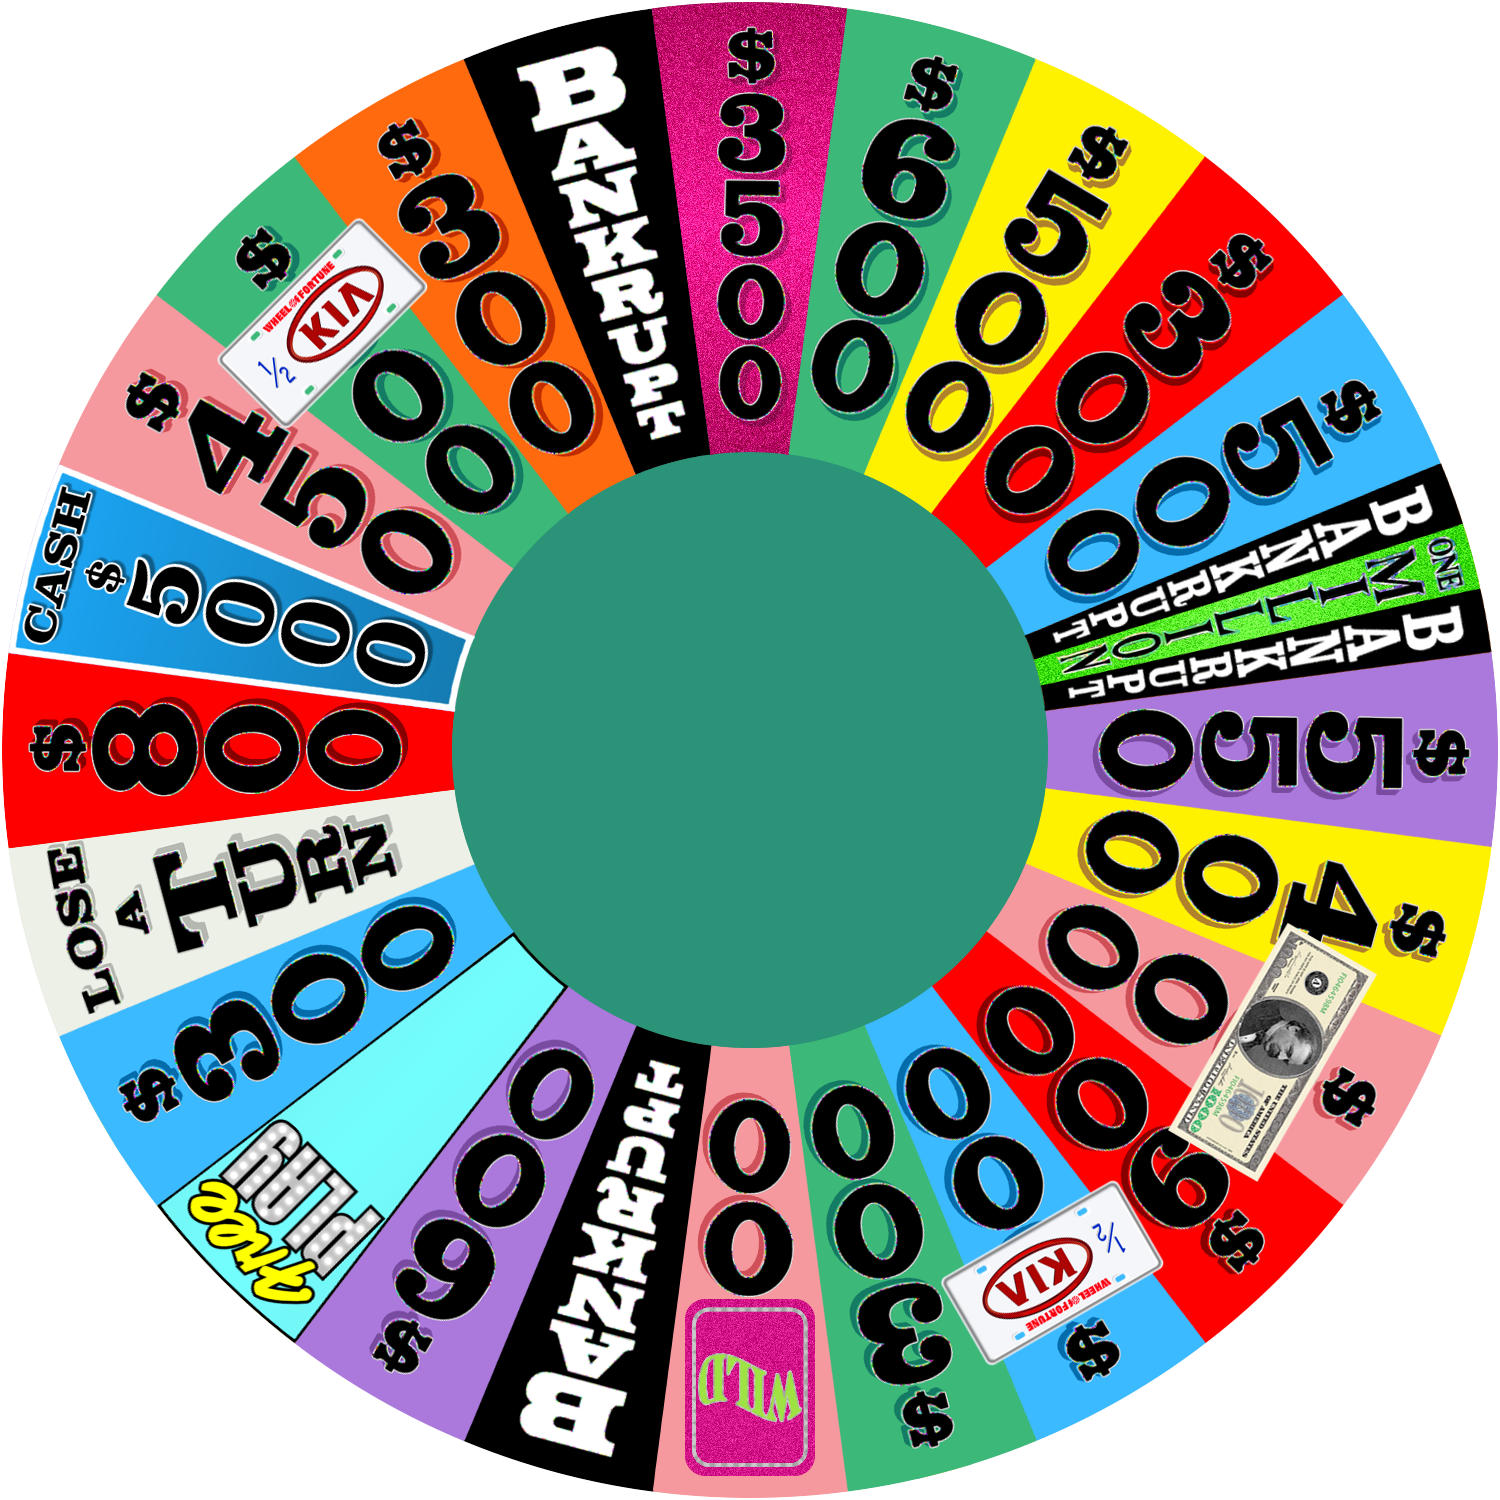 Lottery Experience Wheel - 2012 - Round 3 by wheelgenius